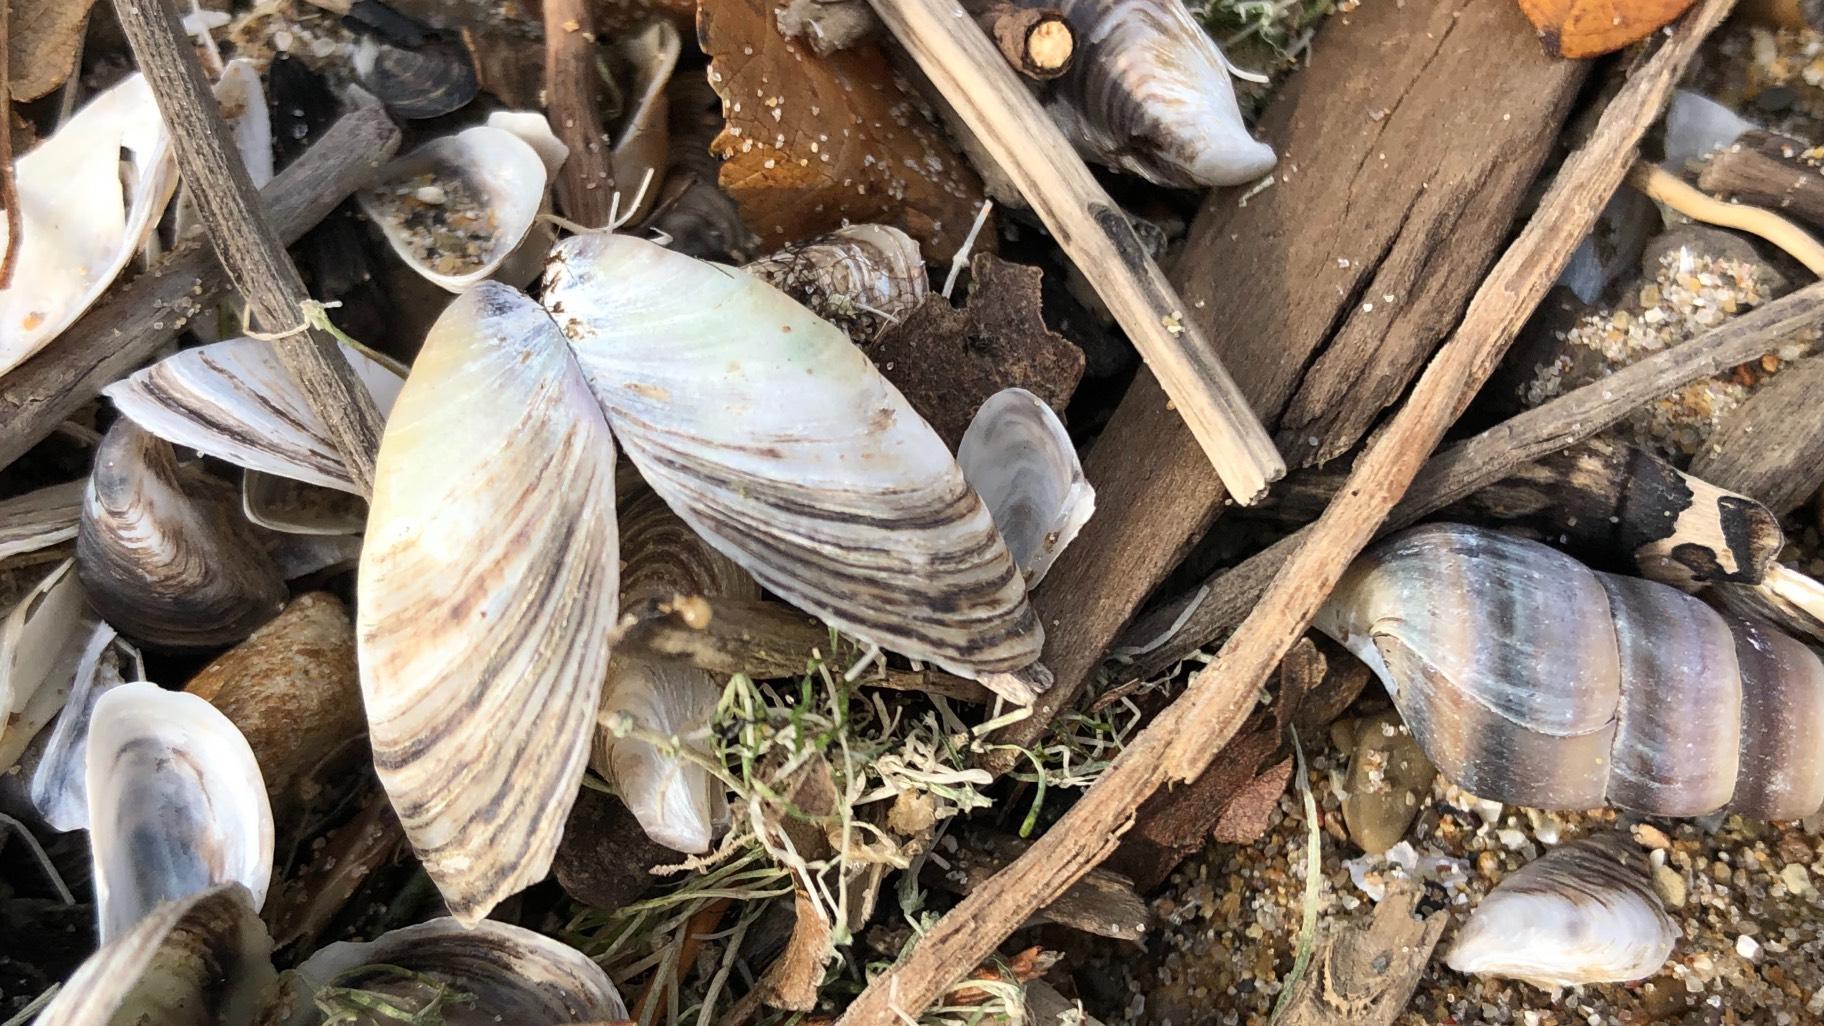 Invasive quagga mussels make up 90% of the invertebrate creatures on the bottom of Lake Michigan. (Patty Wetli / WTTW News)